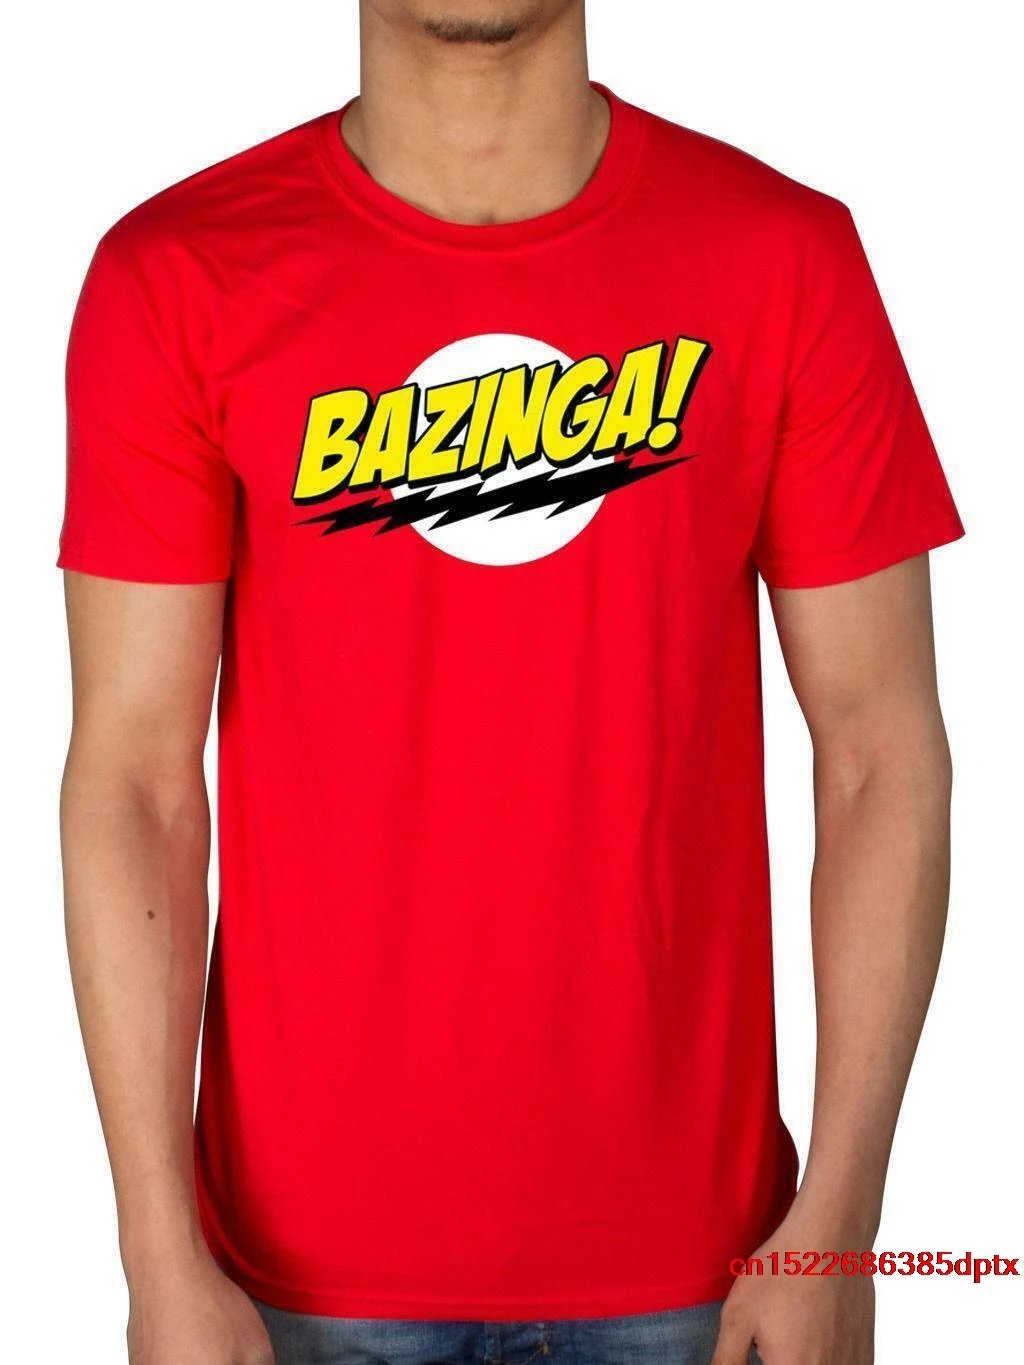 

Bazinga - The Big Bang Theory - Sheldon Cooper - Large (L) Men's T-Shirt man's t-shirt tee